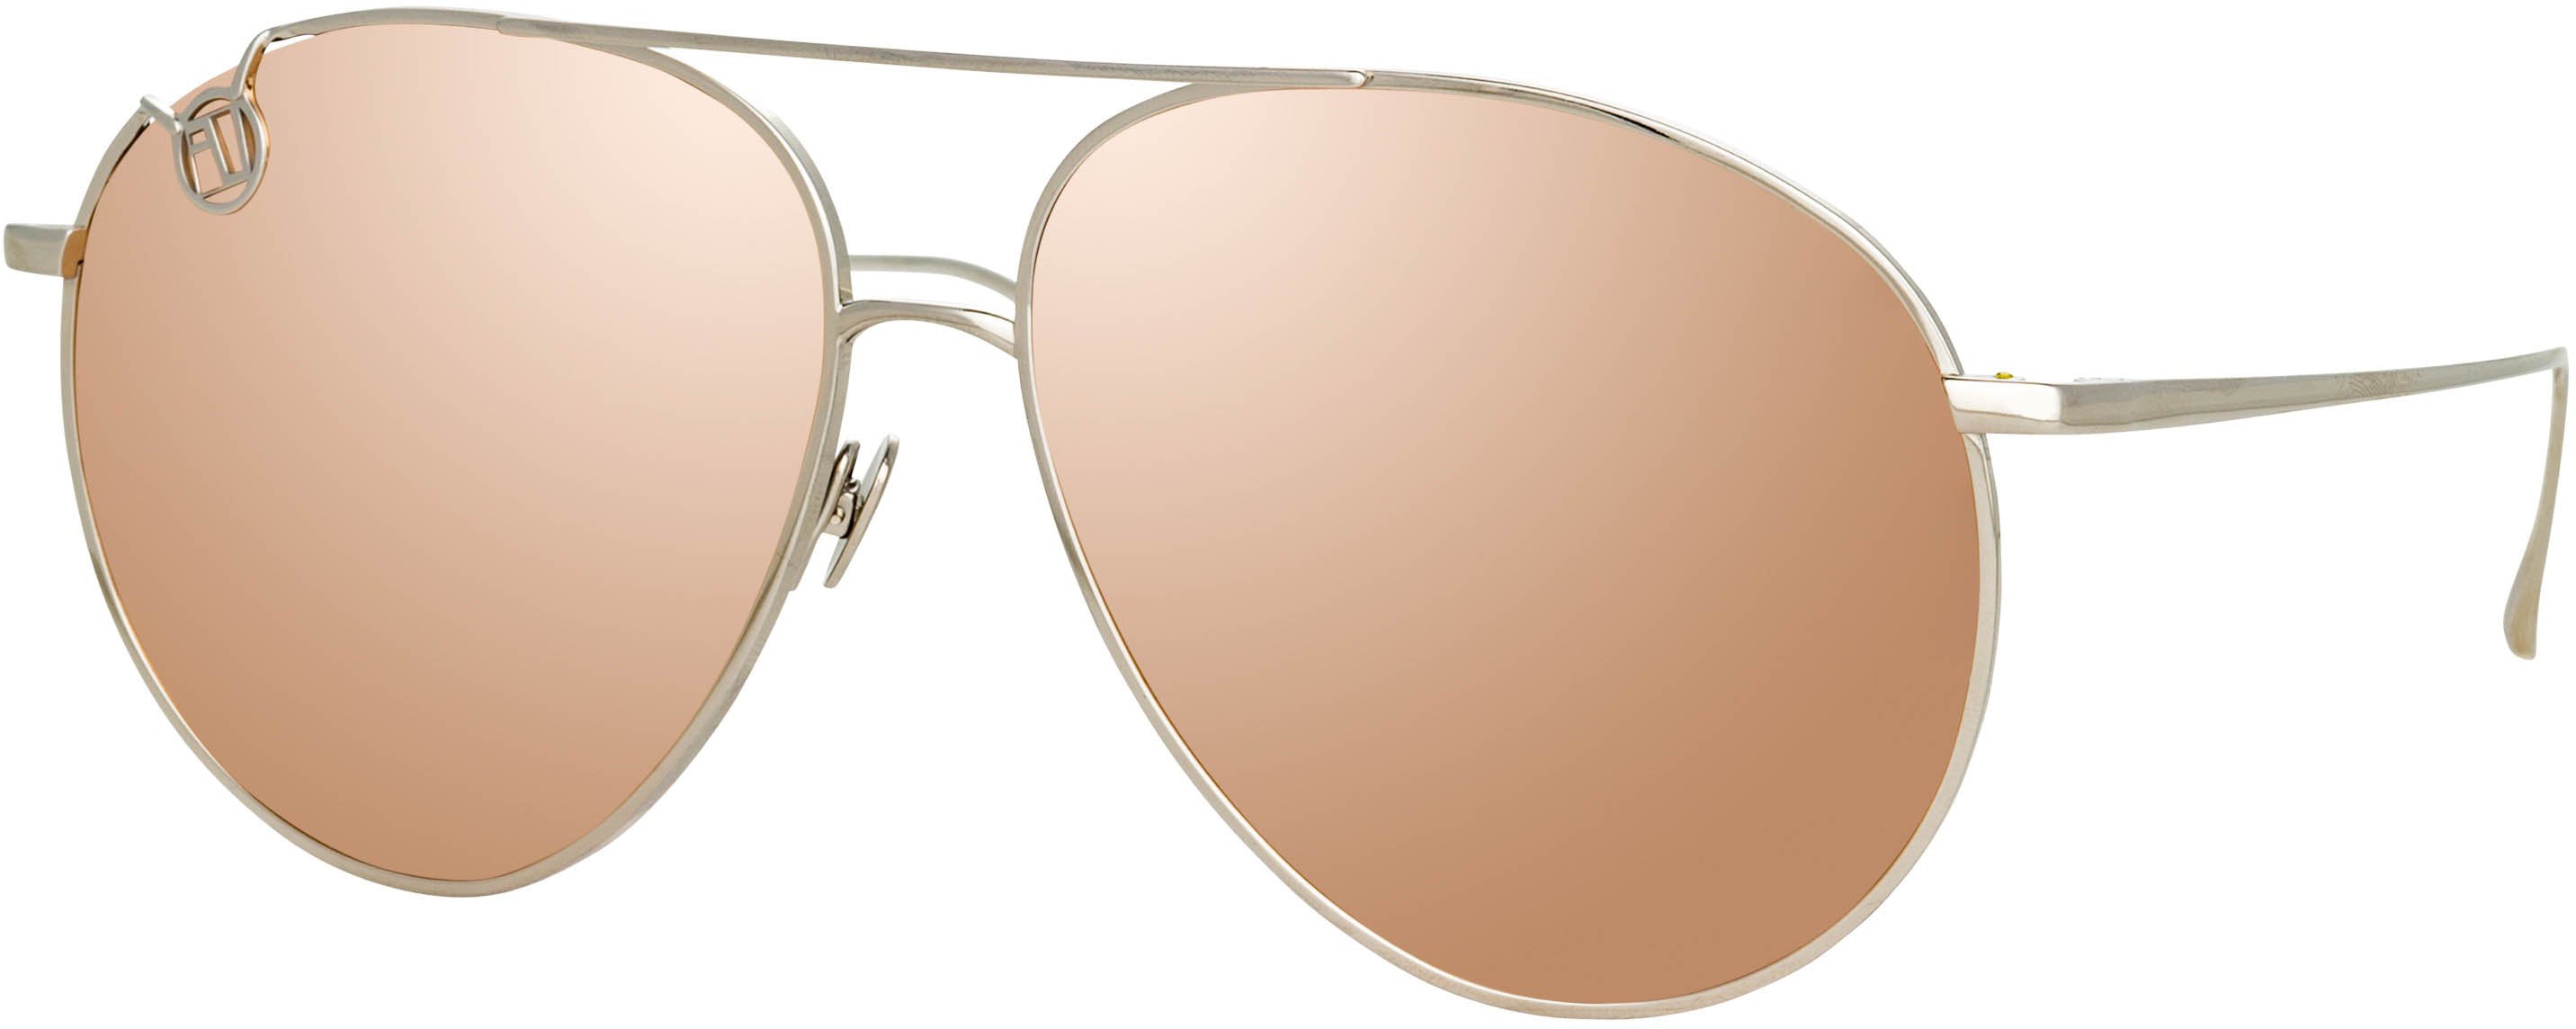 Color_LFL1055C3SUN - Joni Aviator Sunglasses in White Gold and Rose Gold Lenses